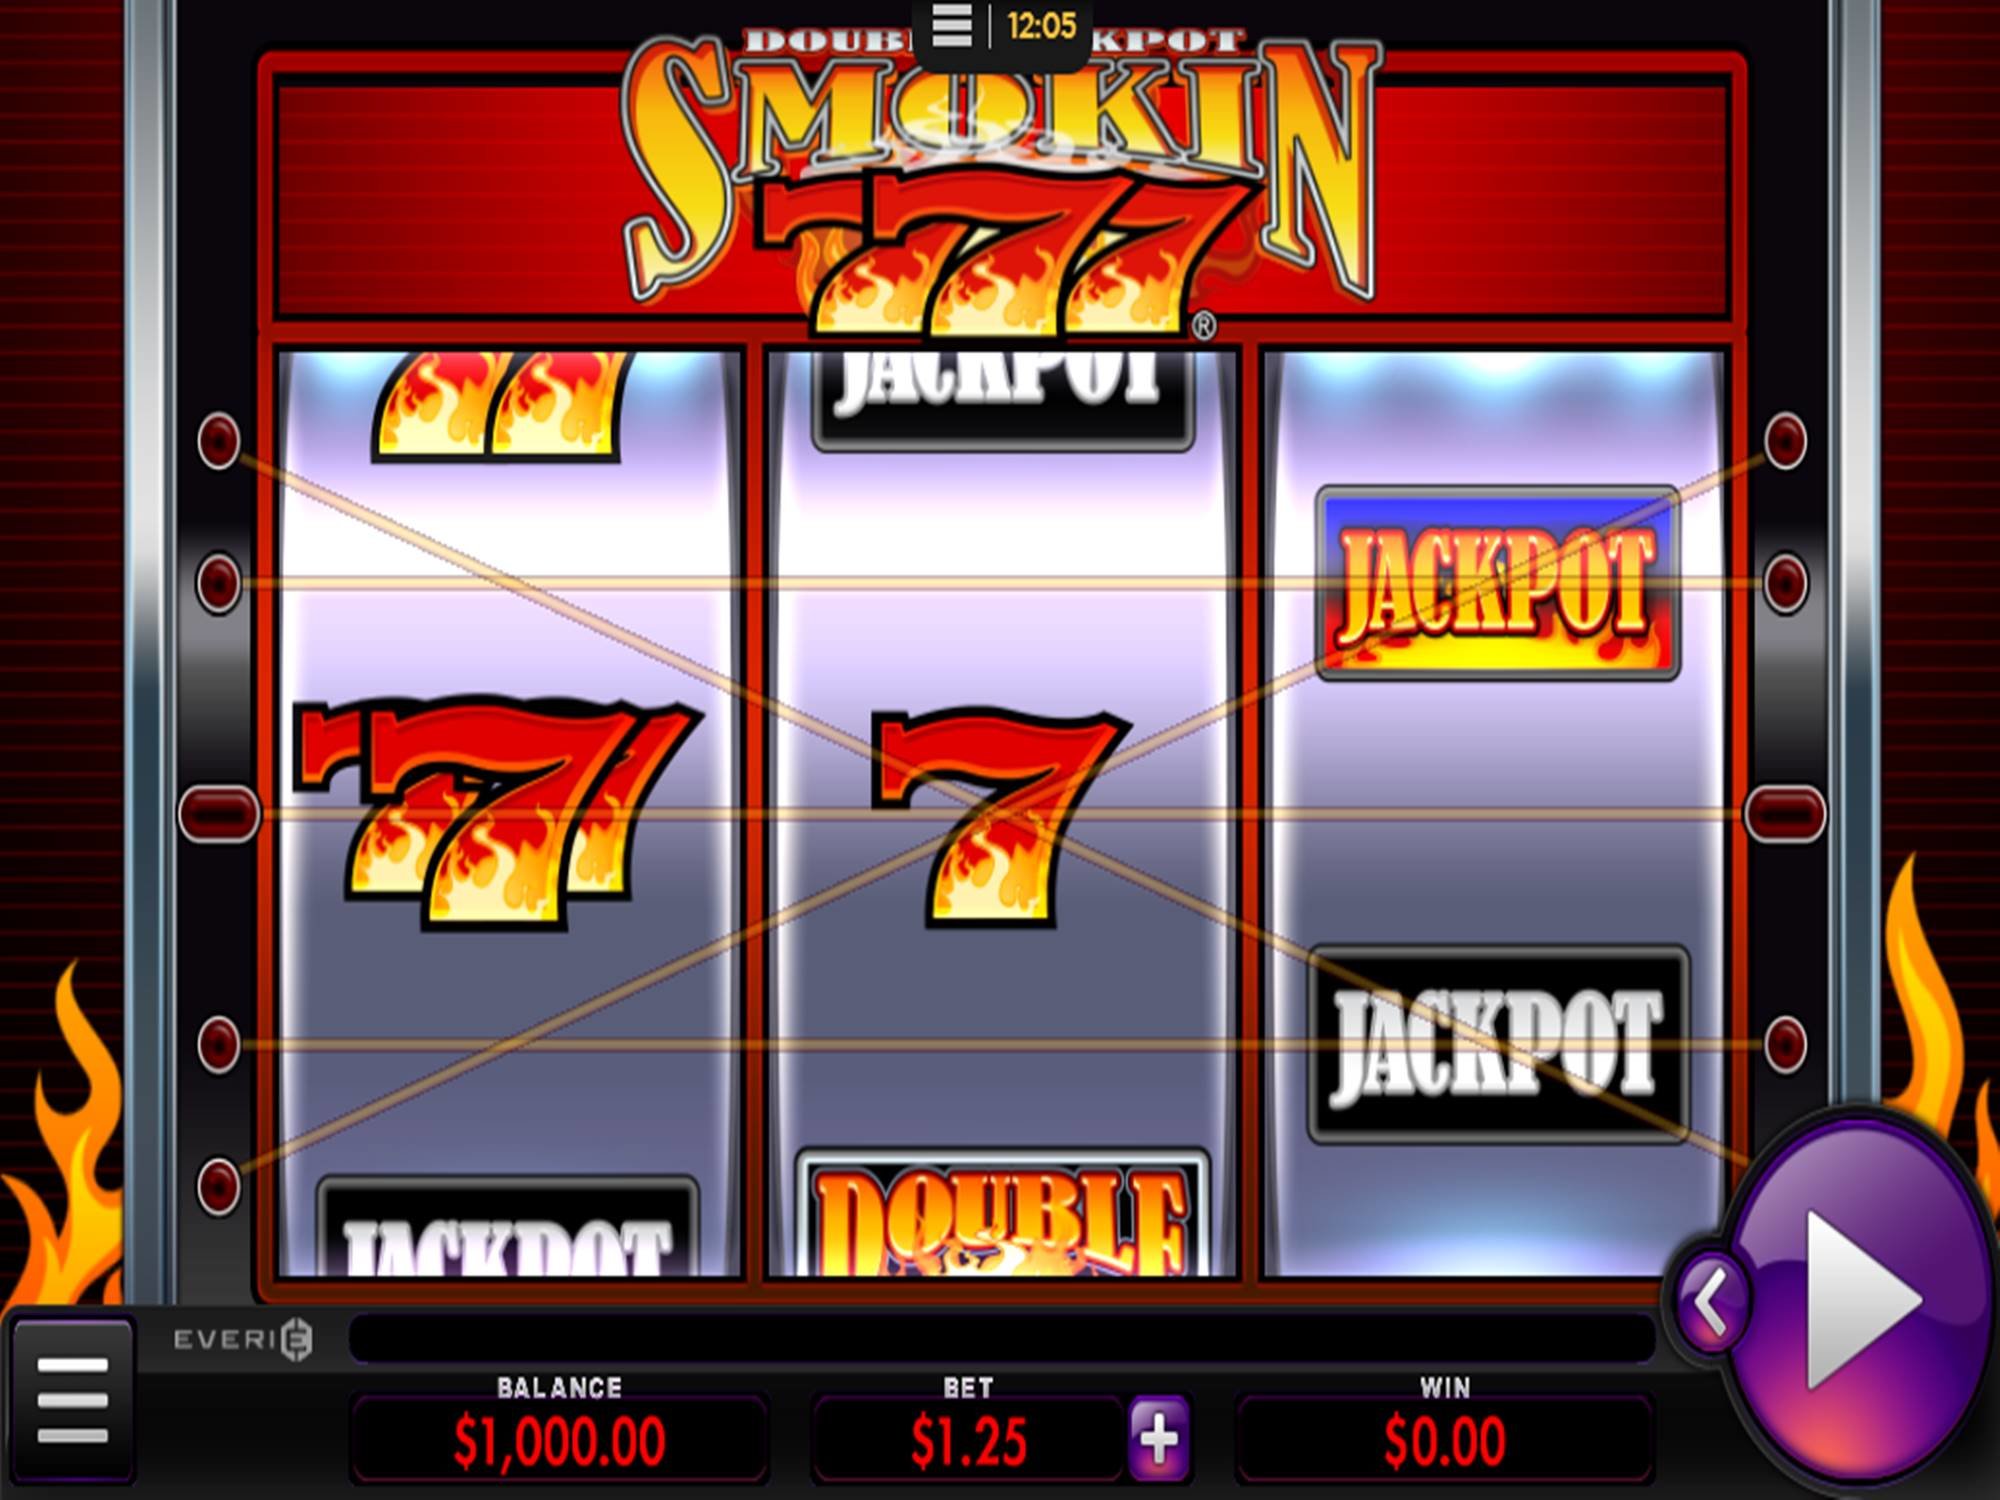 Smokin 777 Slot Casino Review